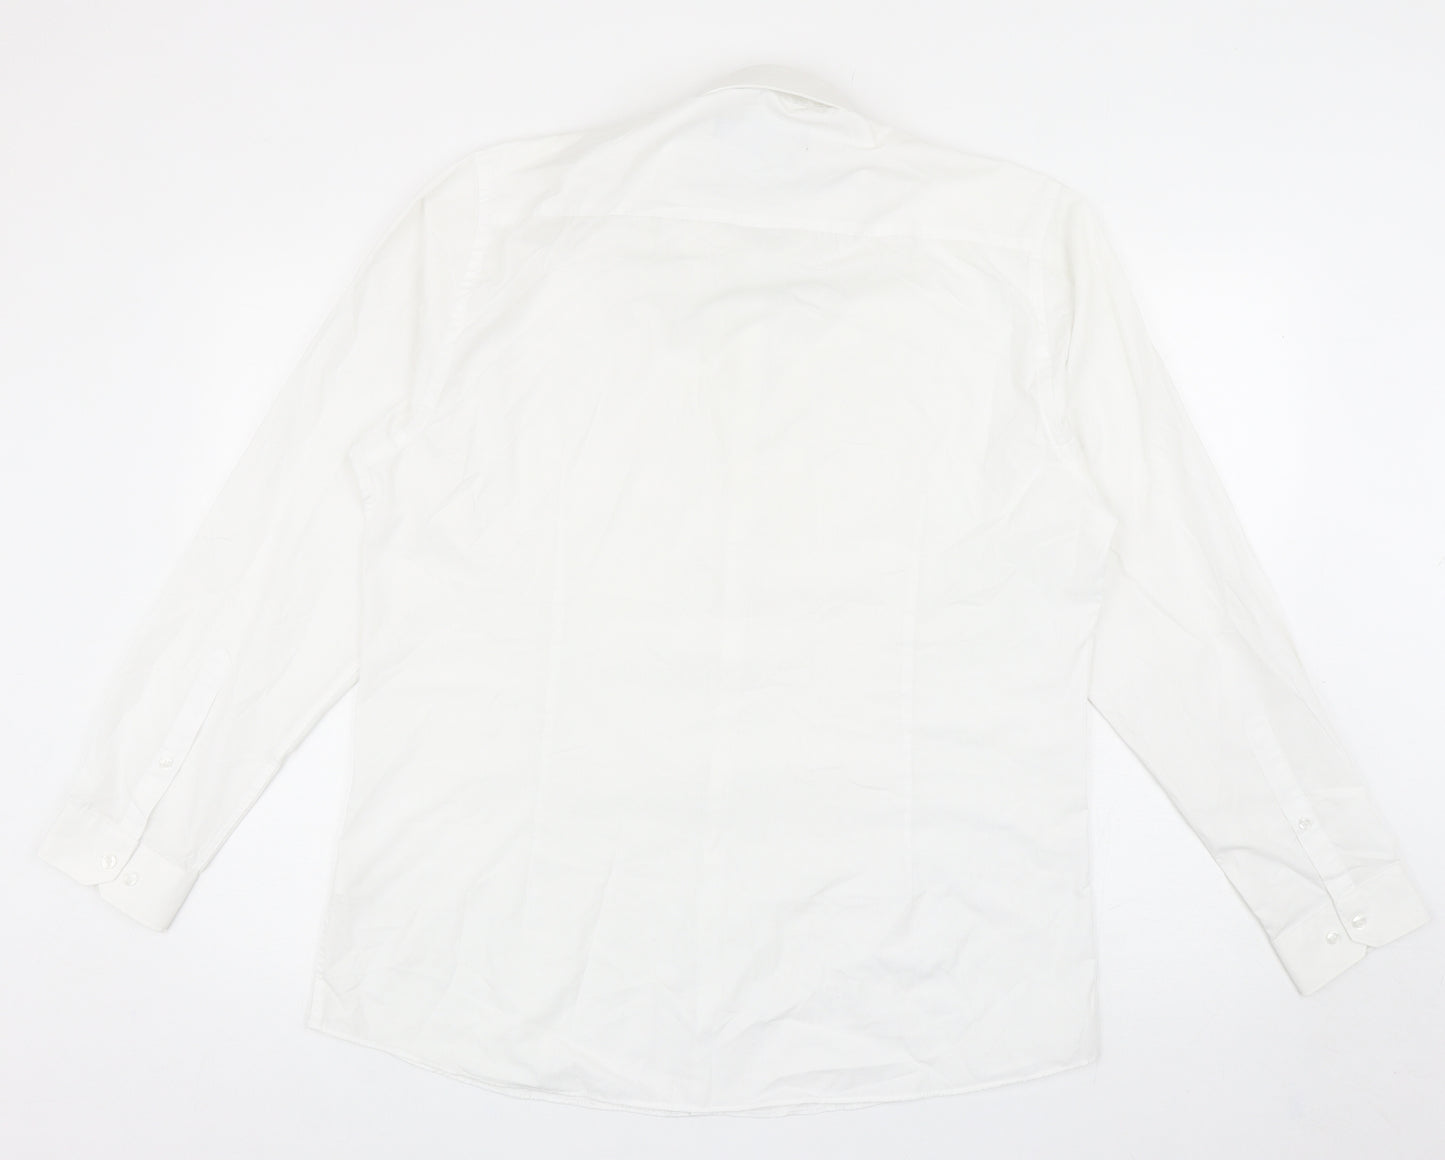 Primark Mens White Cotton Button-Up Size 16.5 Collared Button